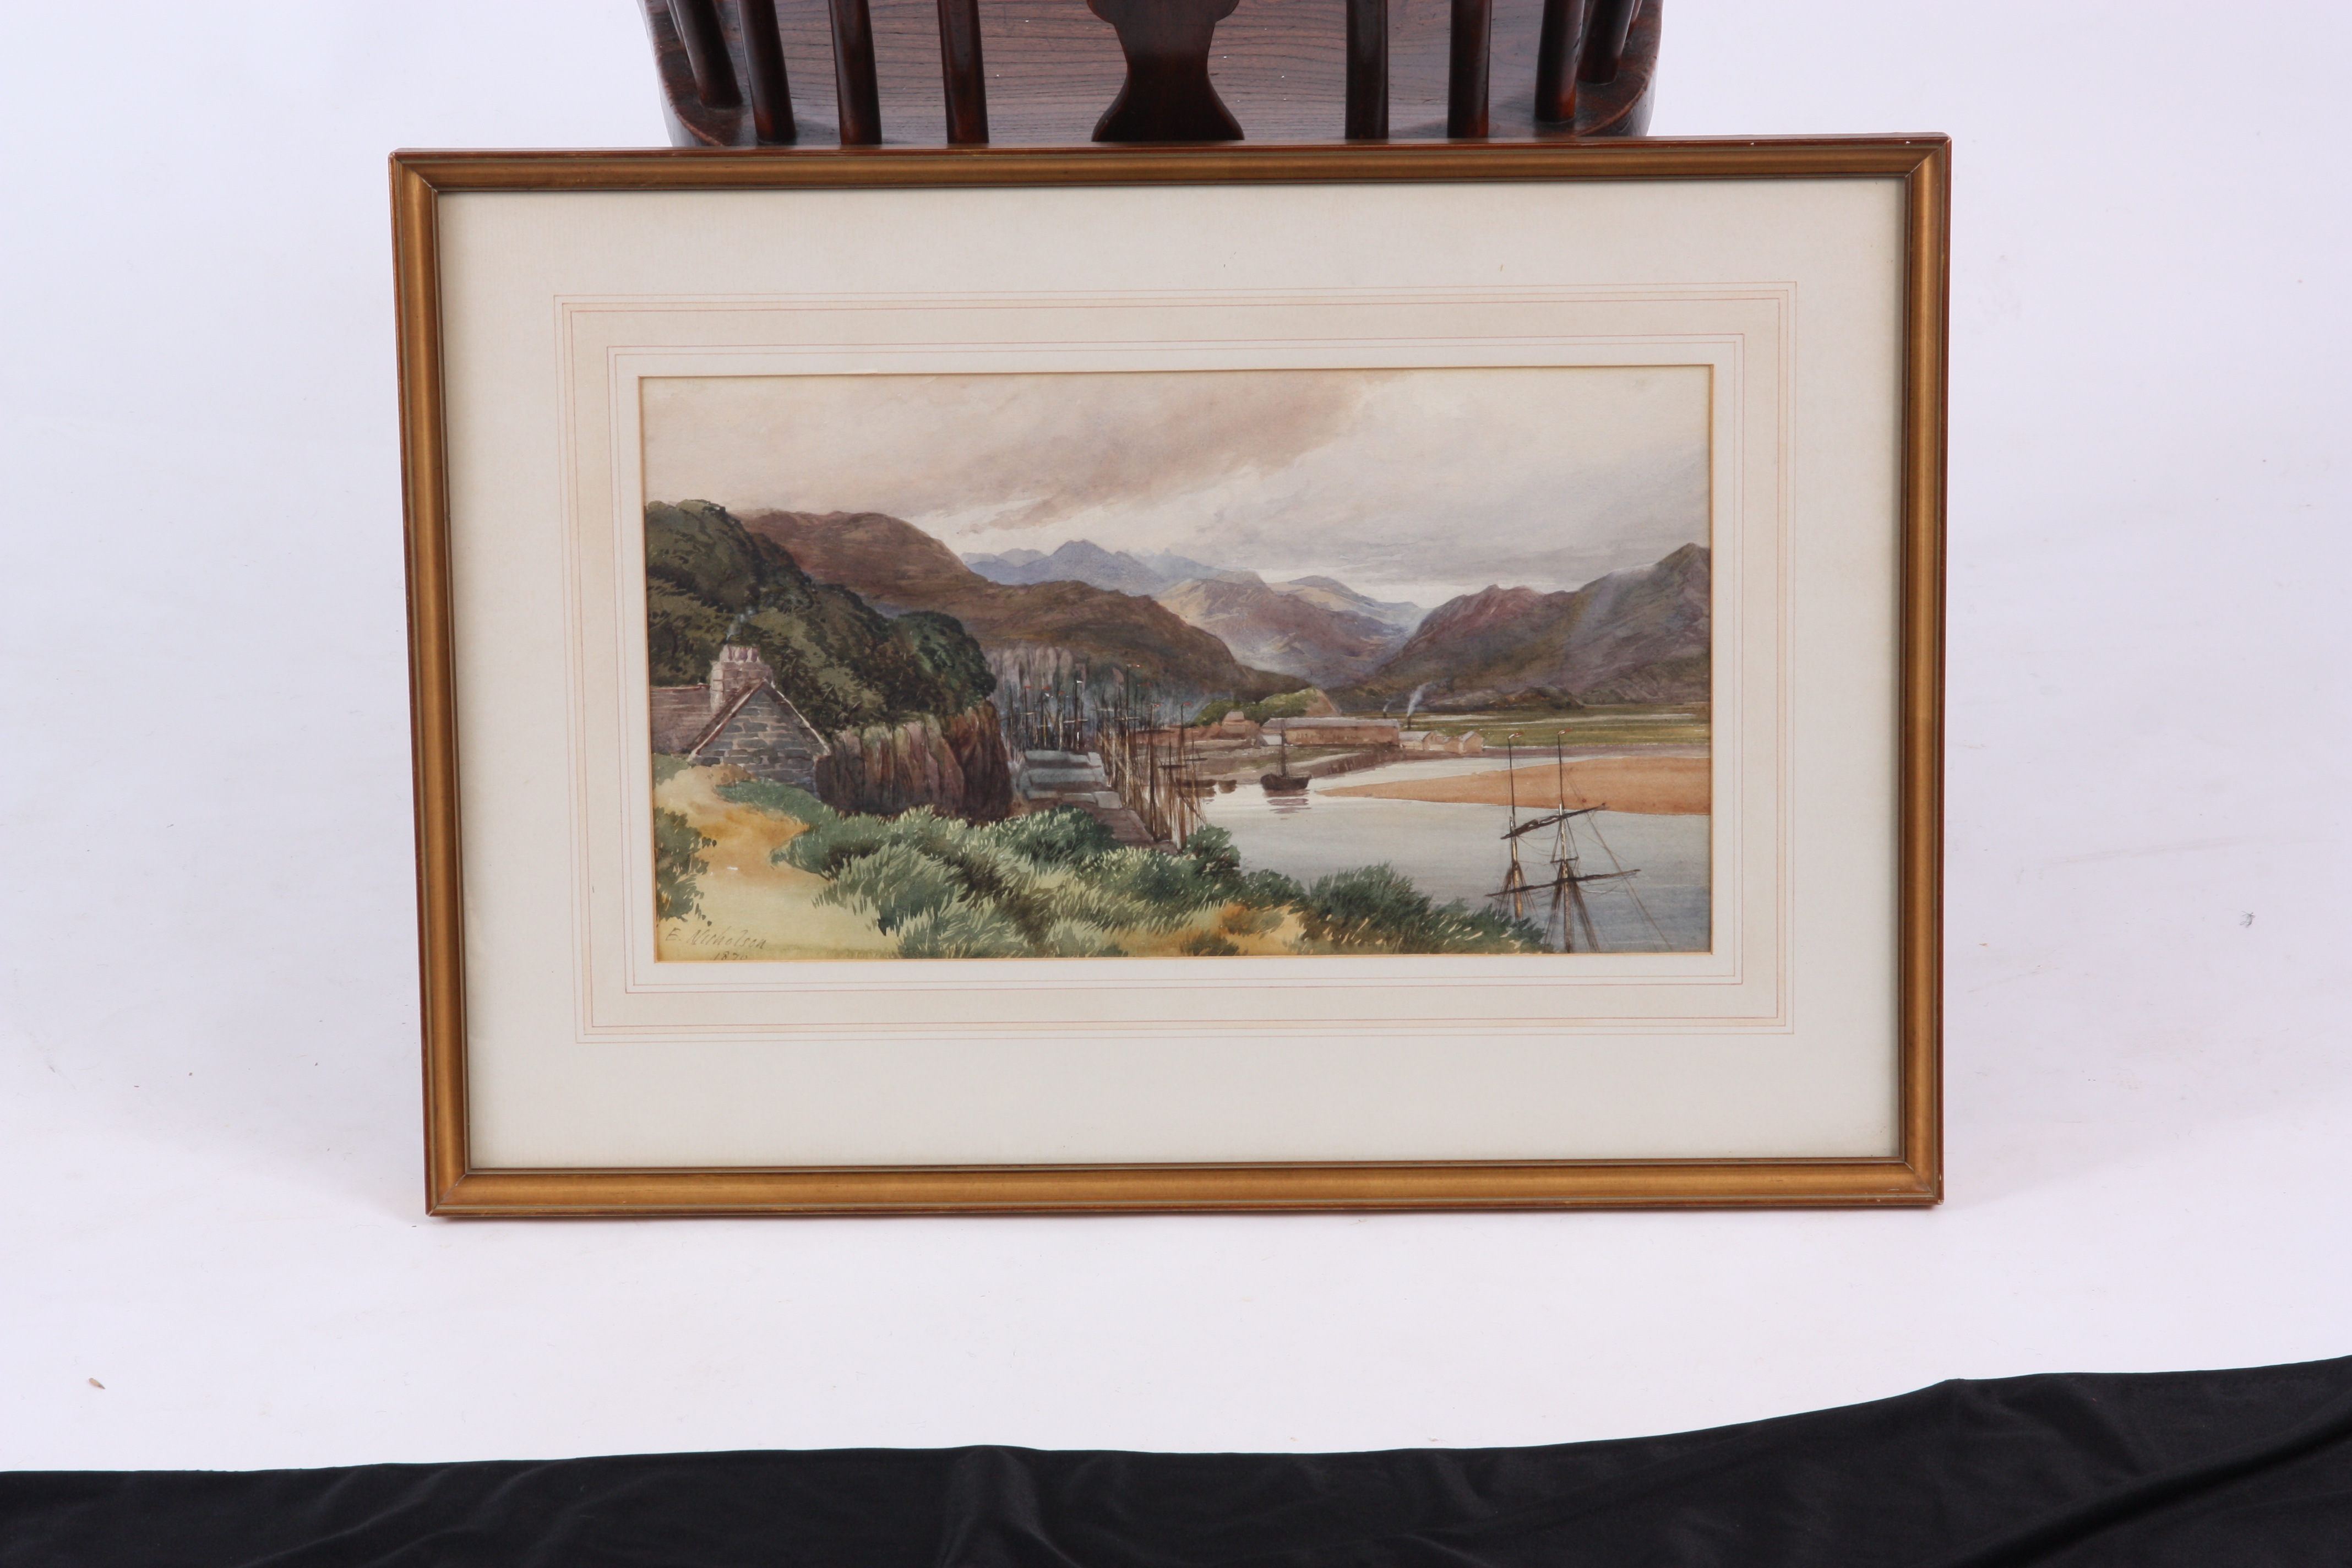 E. NICHOLSON 1870 WATERCOLOUR Landscape scene with estuary and boats 24.5cm high 45cm wide - - Image 2 of 5